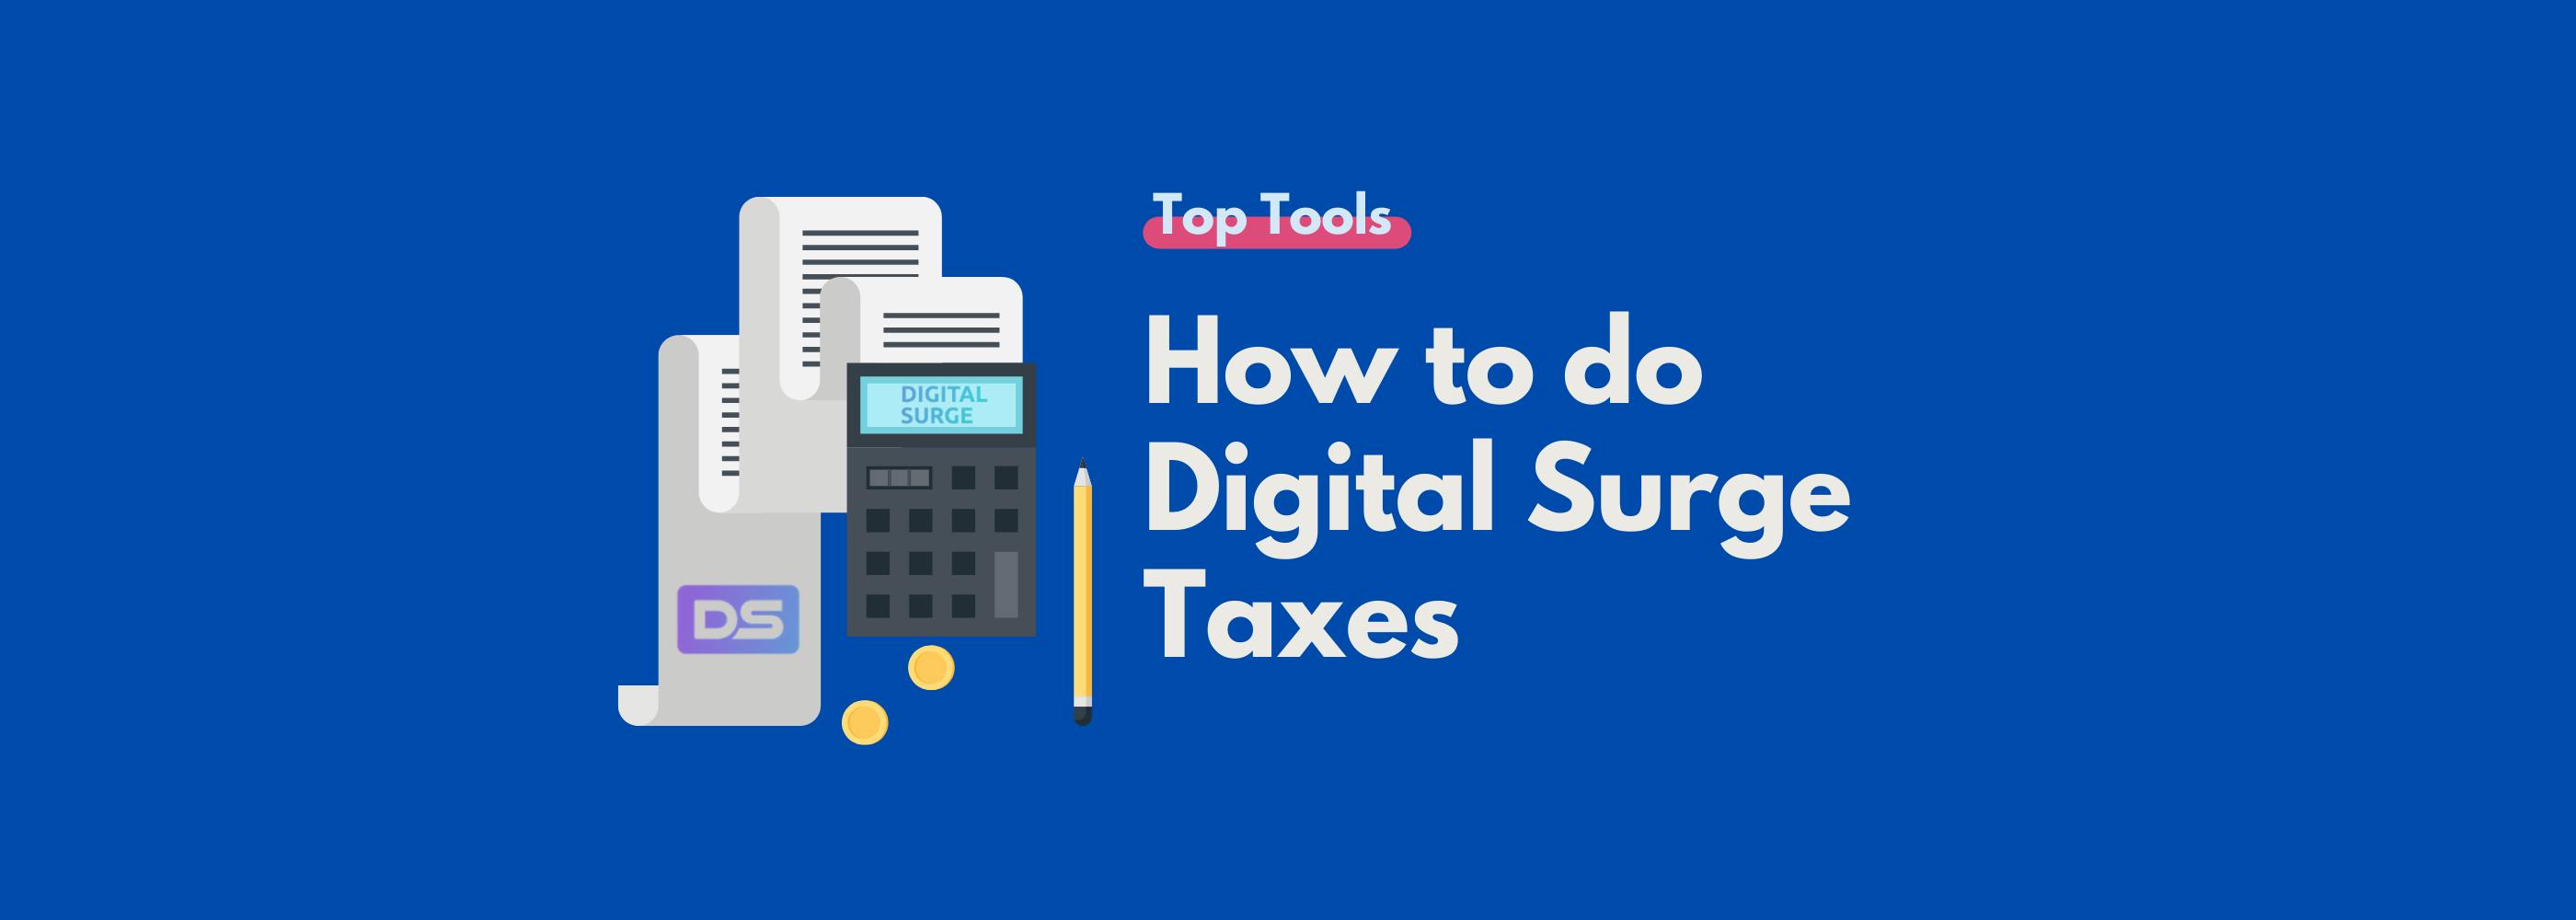 Digital Surge Tax Guide